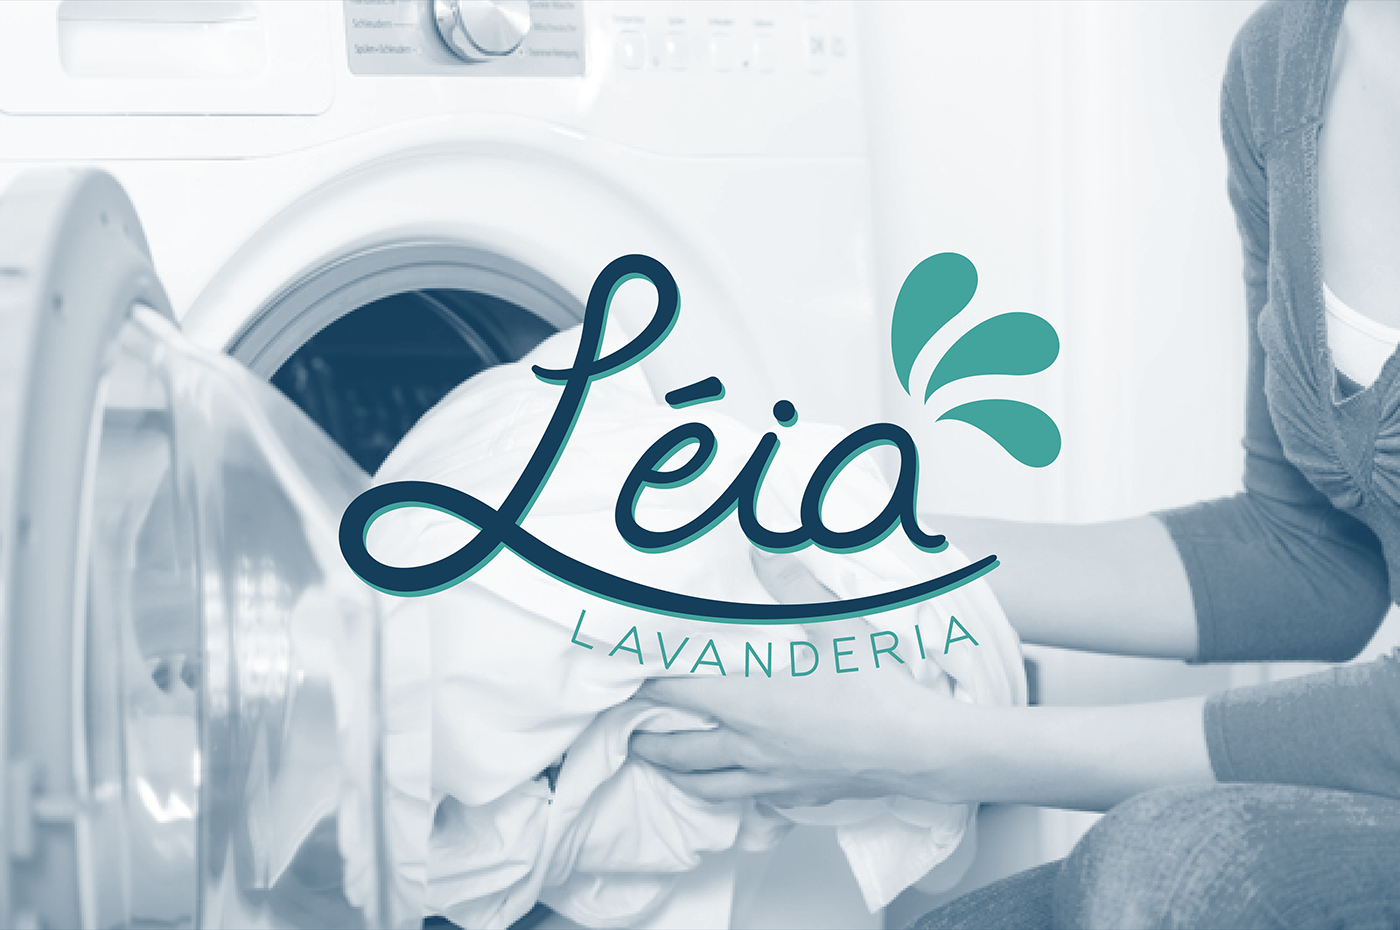 branding  lavanderia Léia Lavanderia lettering